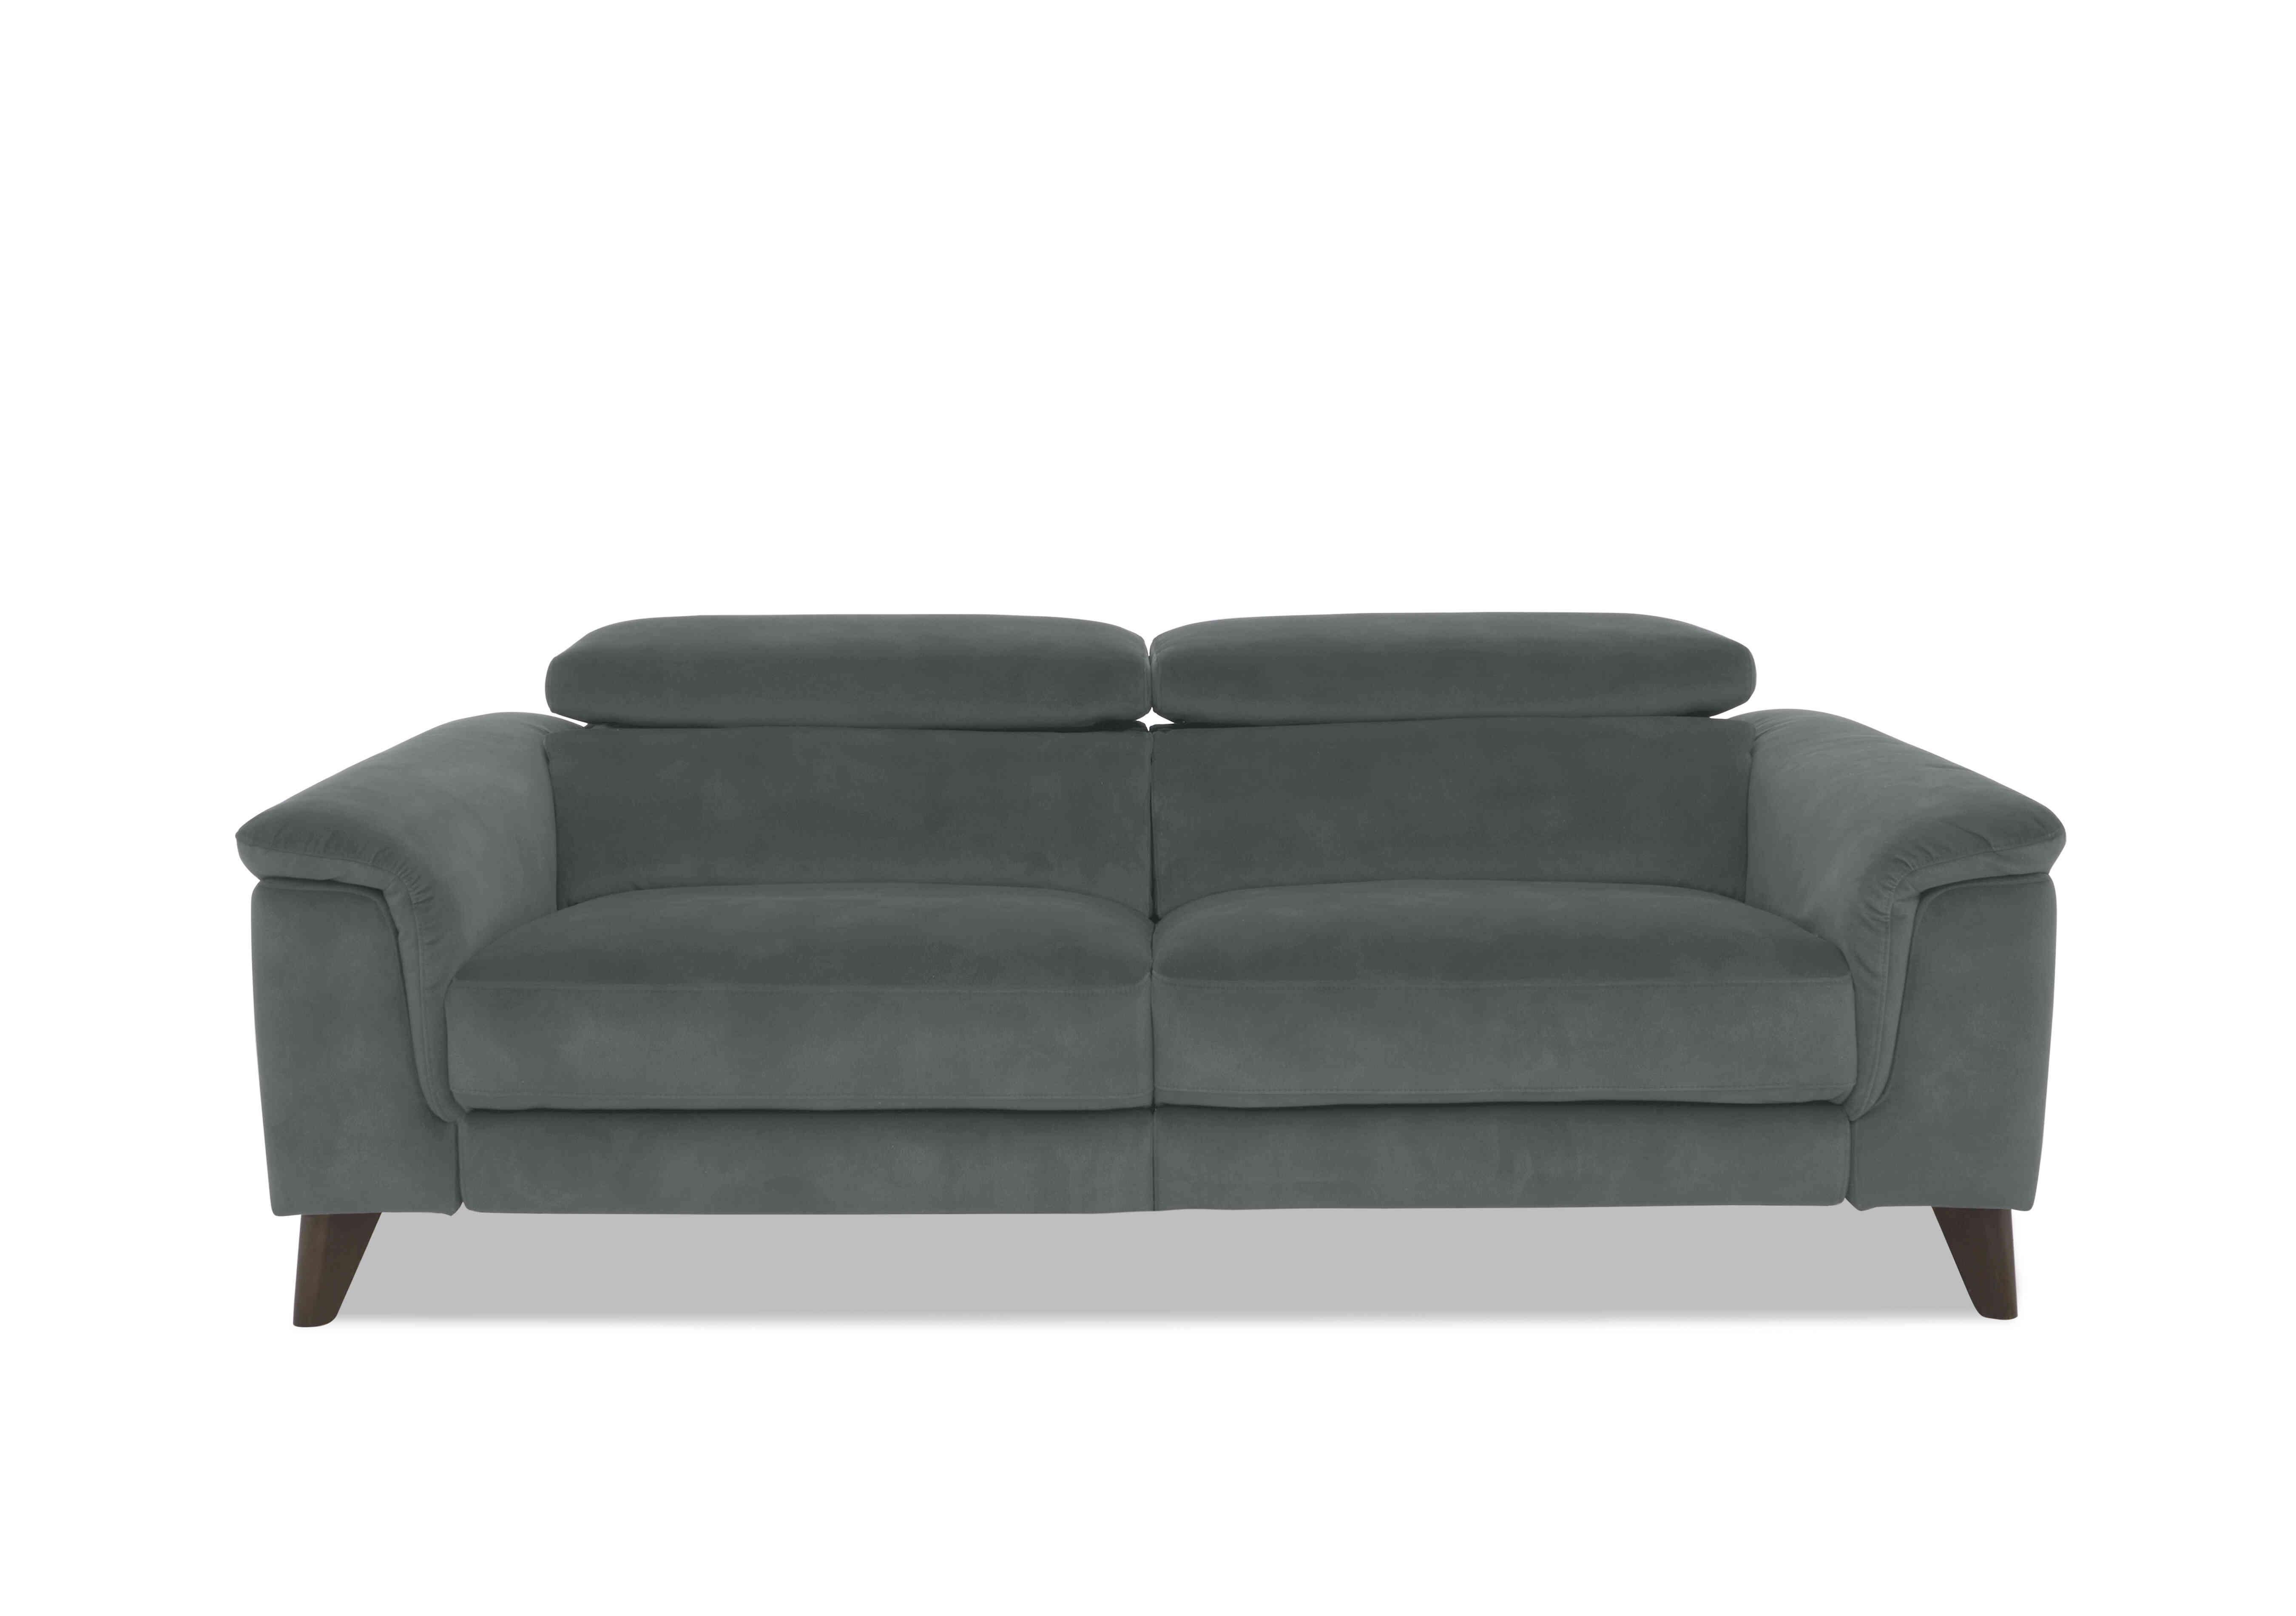 Wade 3 Seater Fabric Sofa in Fab-Meg-R20 Pewter on Furniture Village